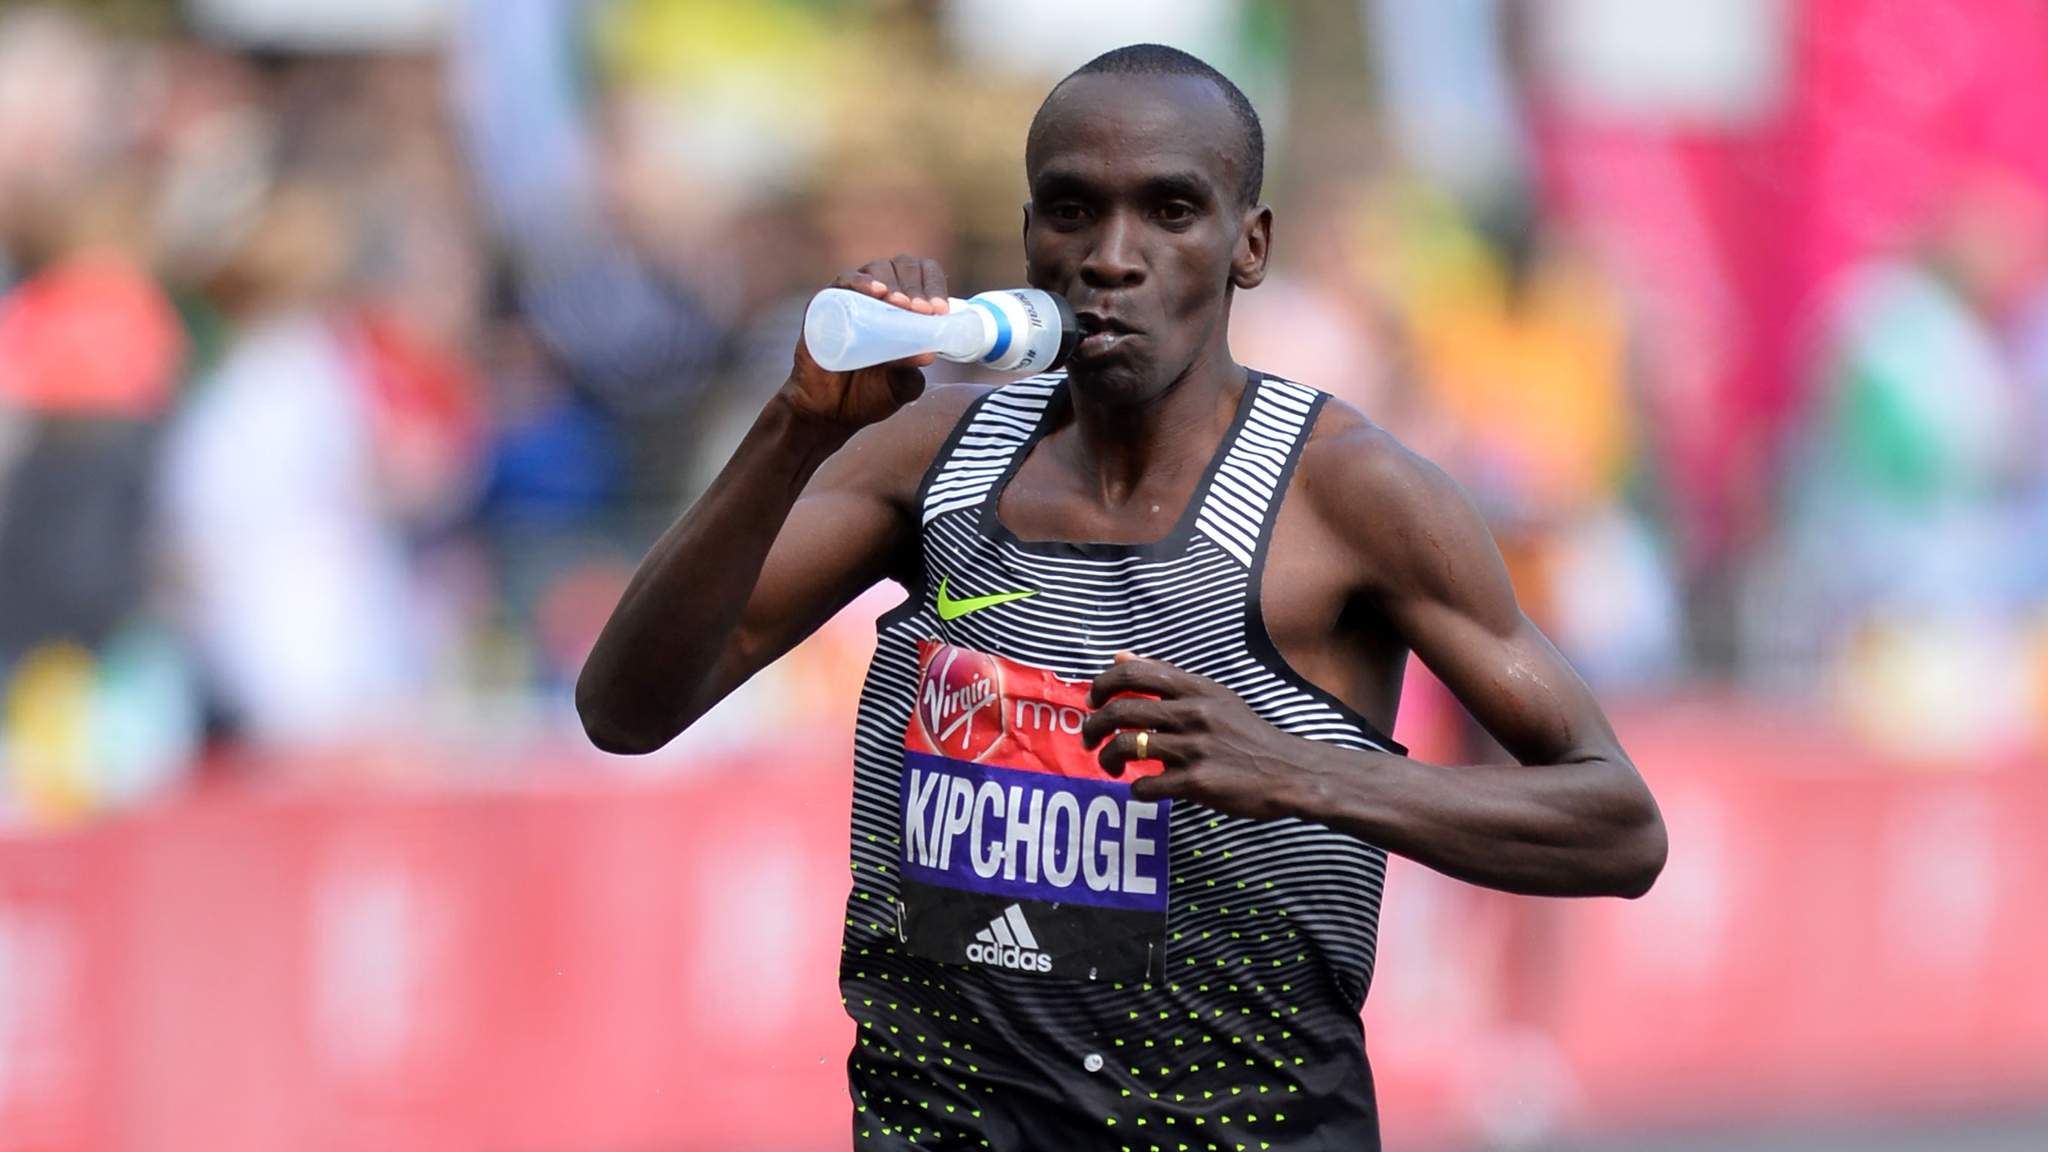 Kipchoge Sets London Marathon Record